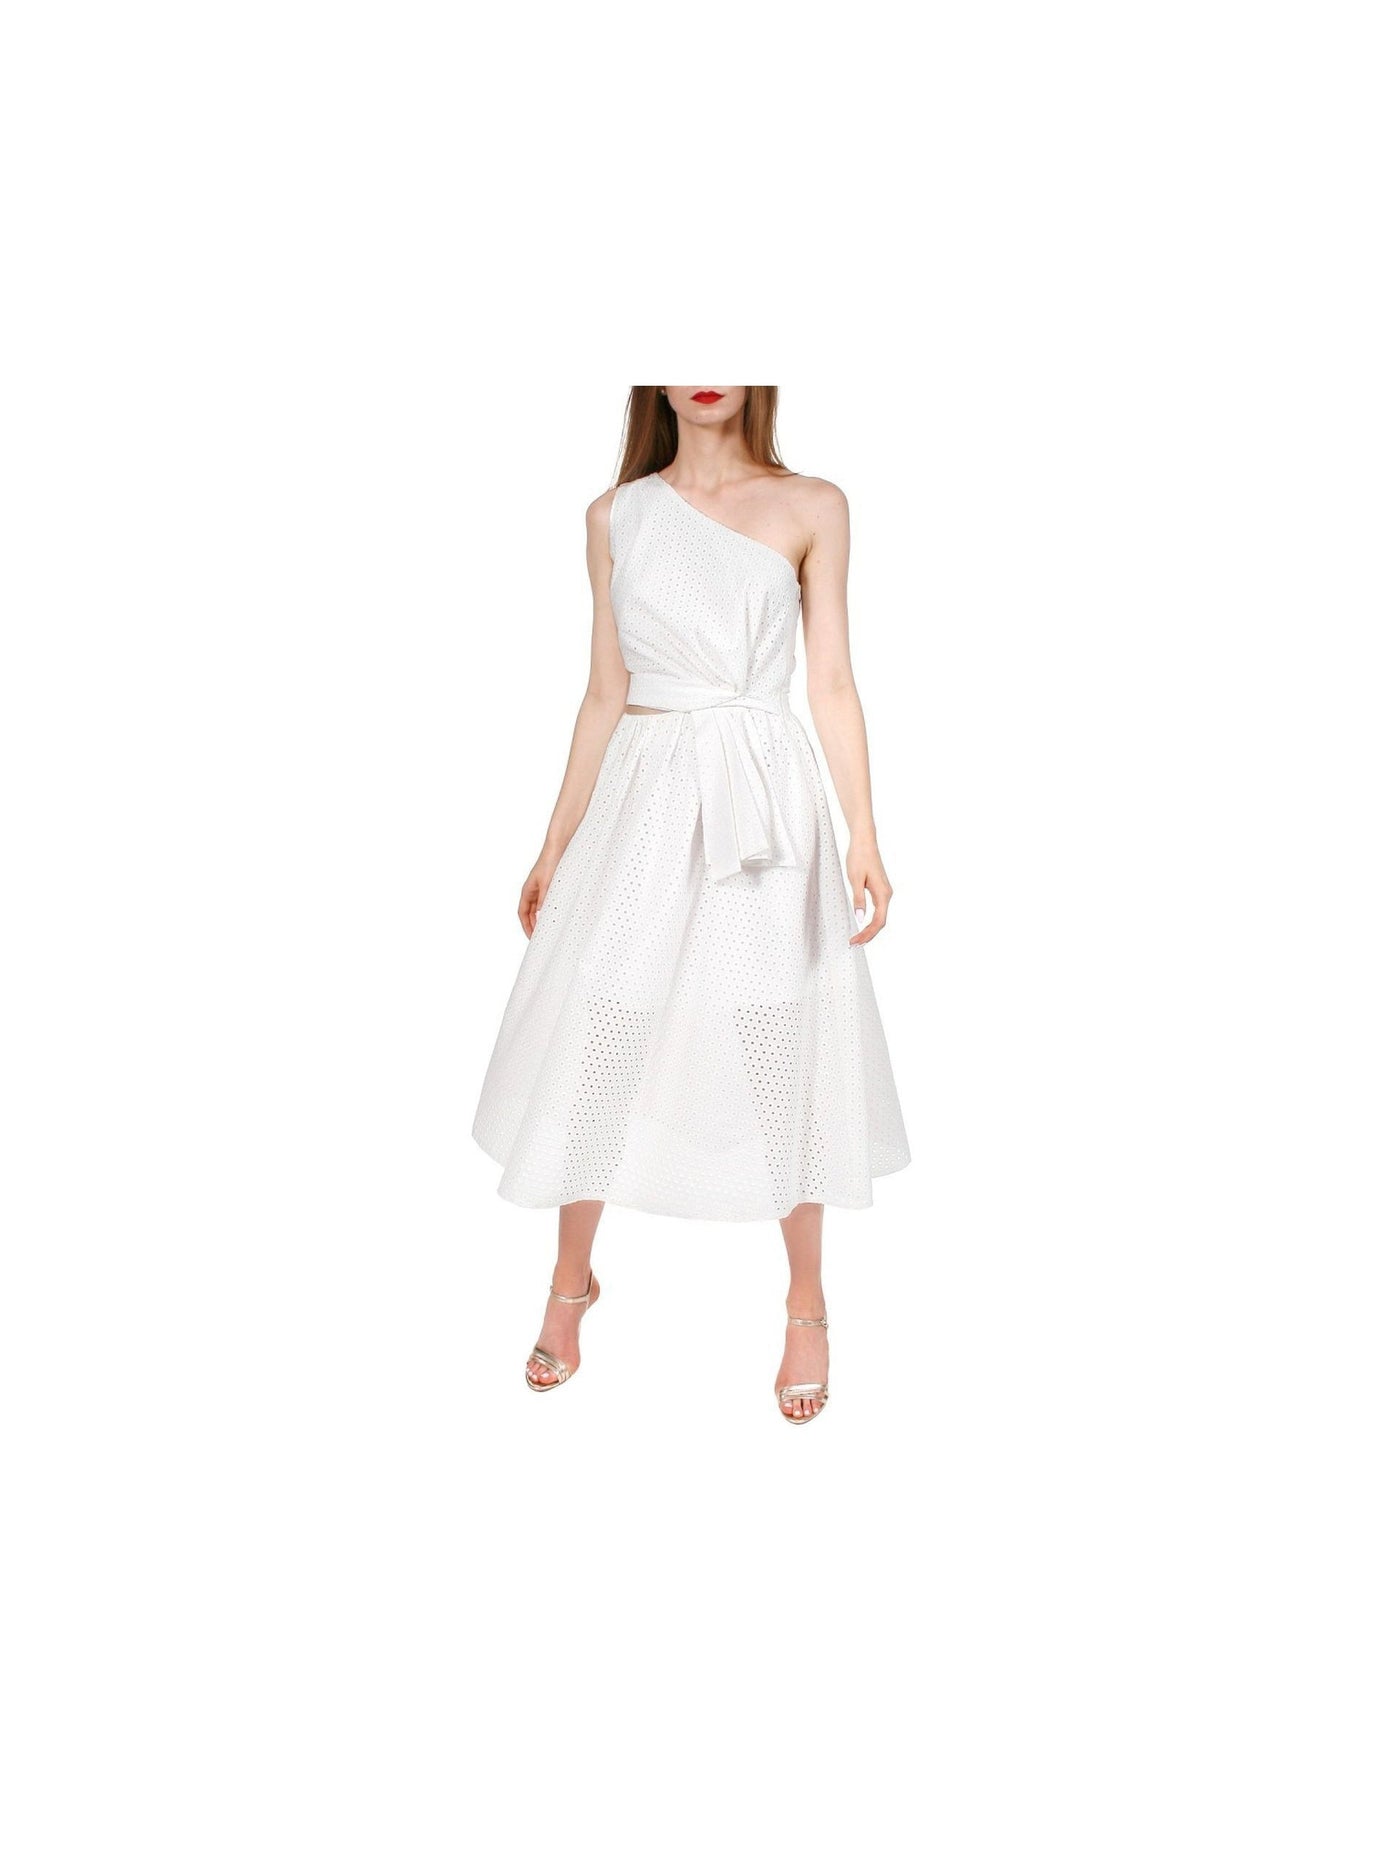 Euridike Antique White Dress